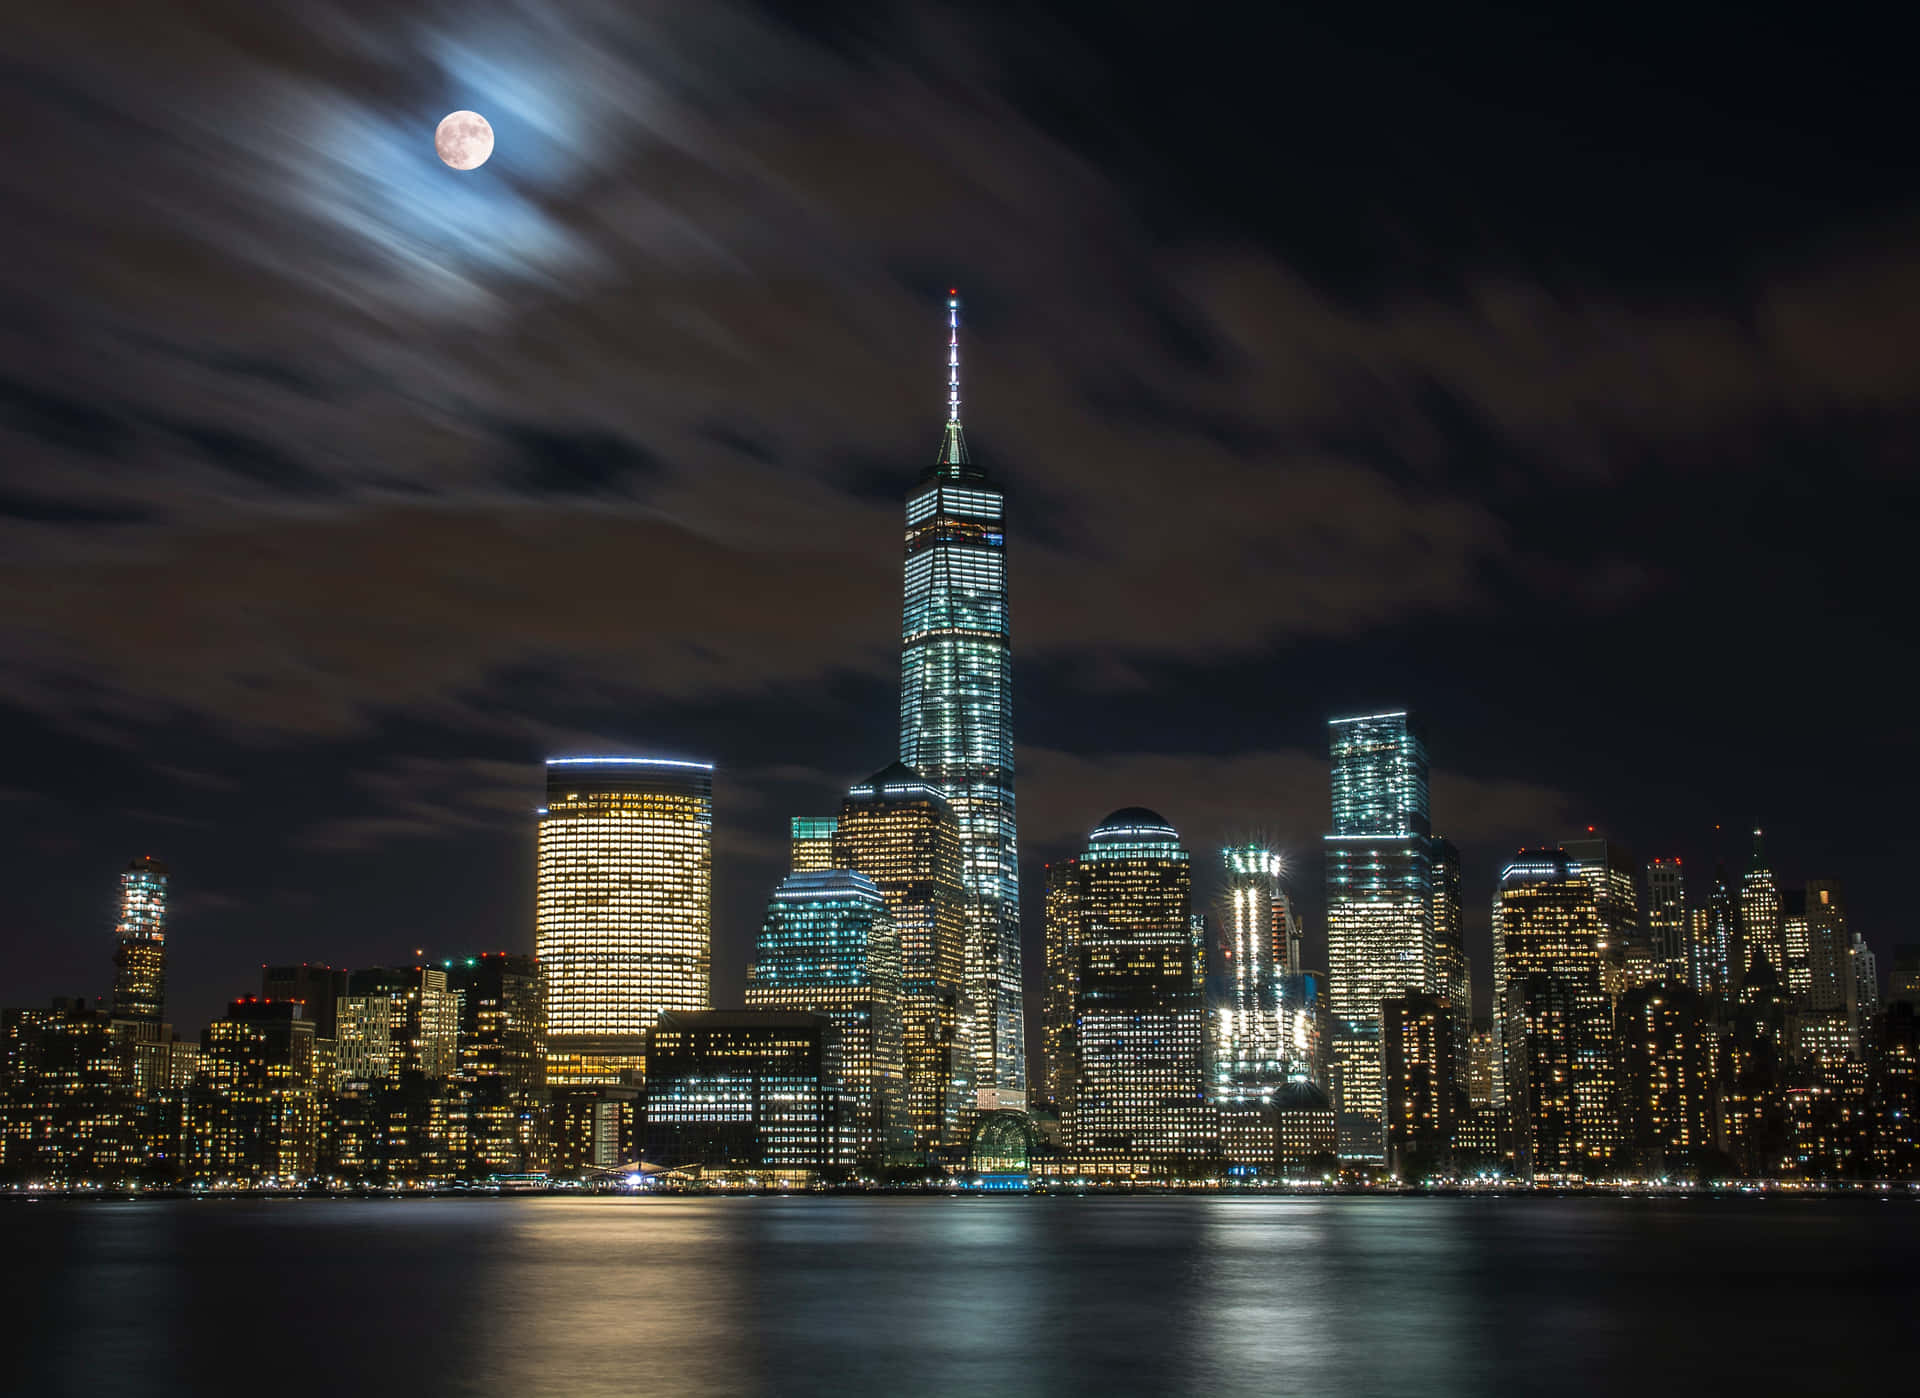 The iconic night skyline of New York City